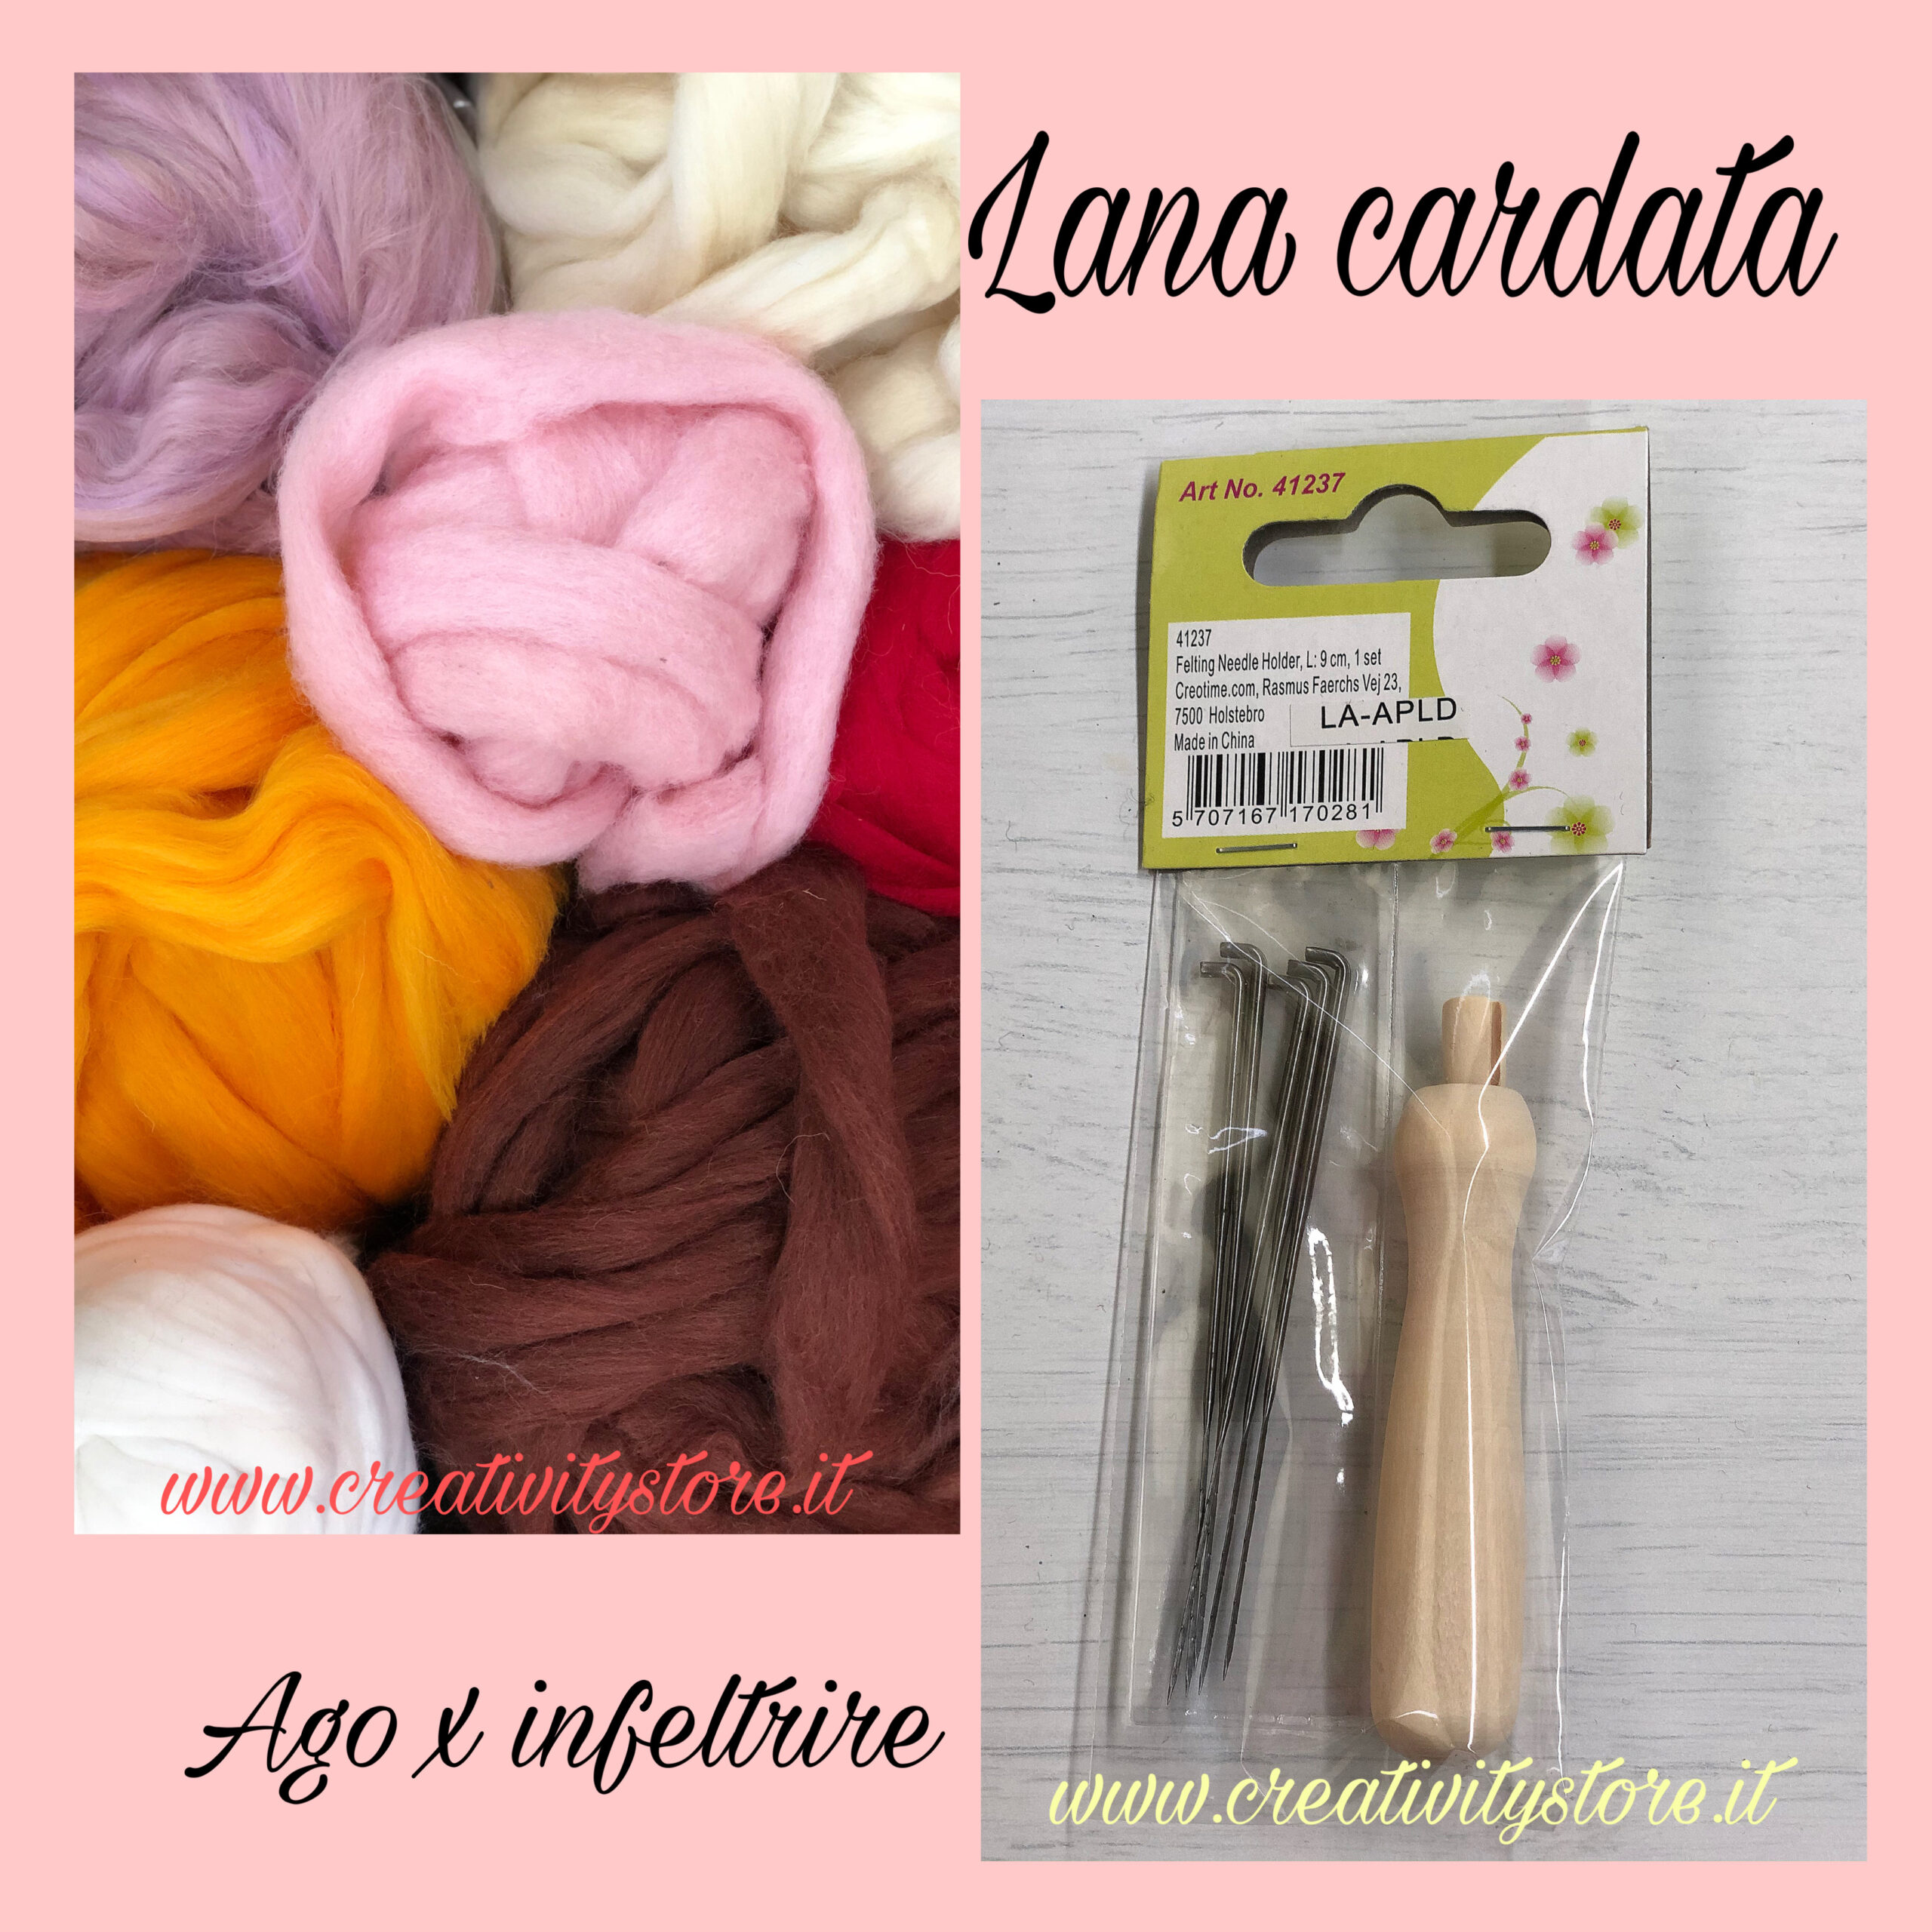 Lana Cardata - Creativity Store